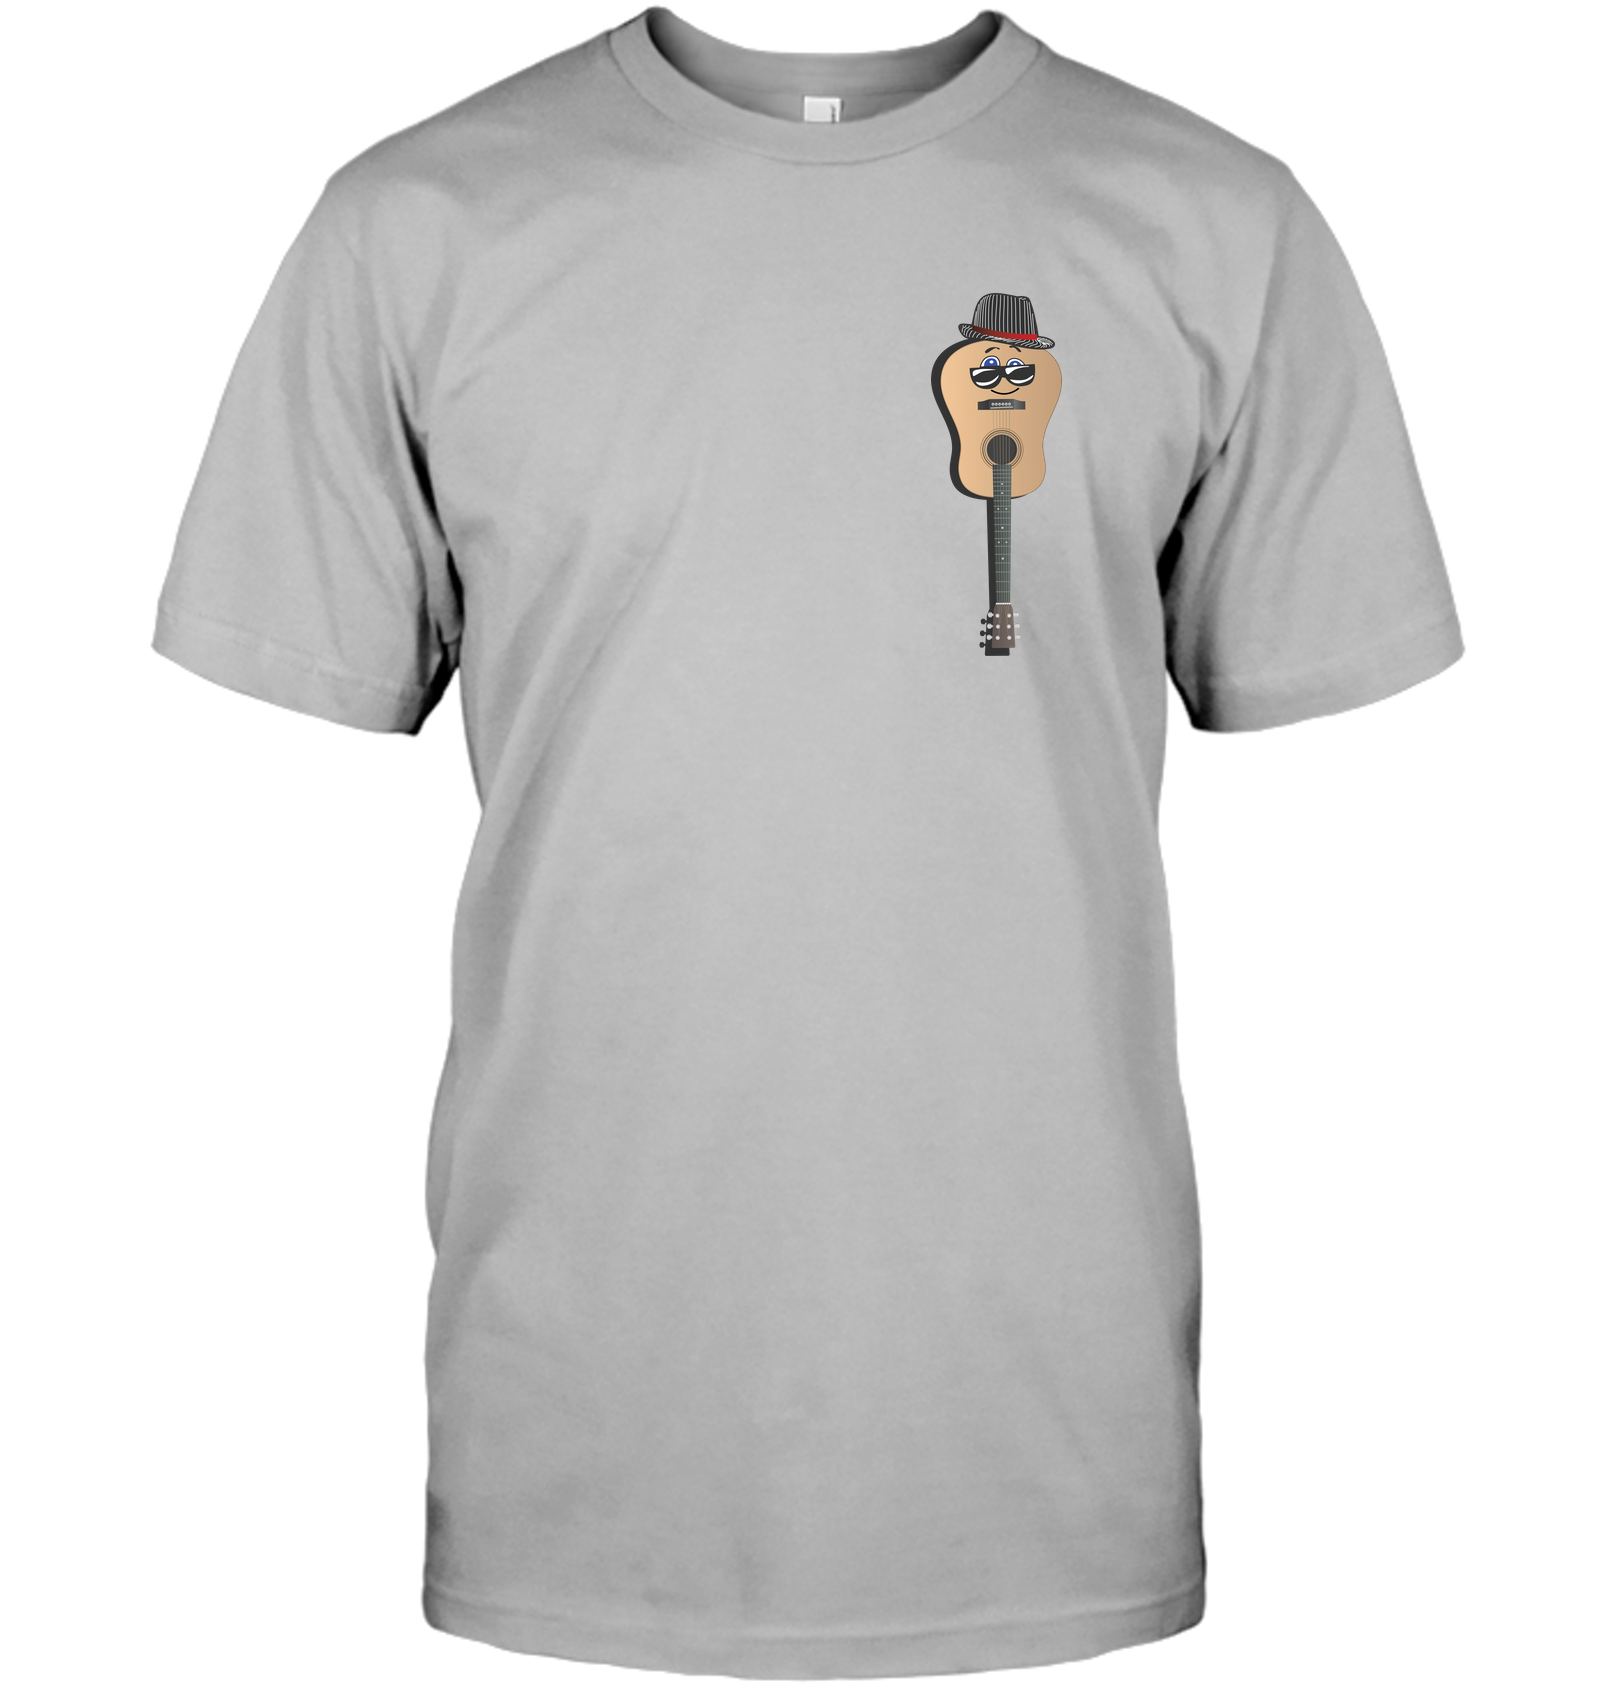 Guitar Man (Pocket Size) - Hanes Adult Tagless® T-Shirt